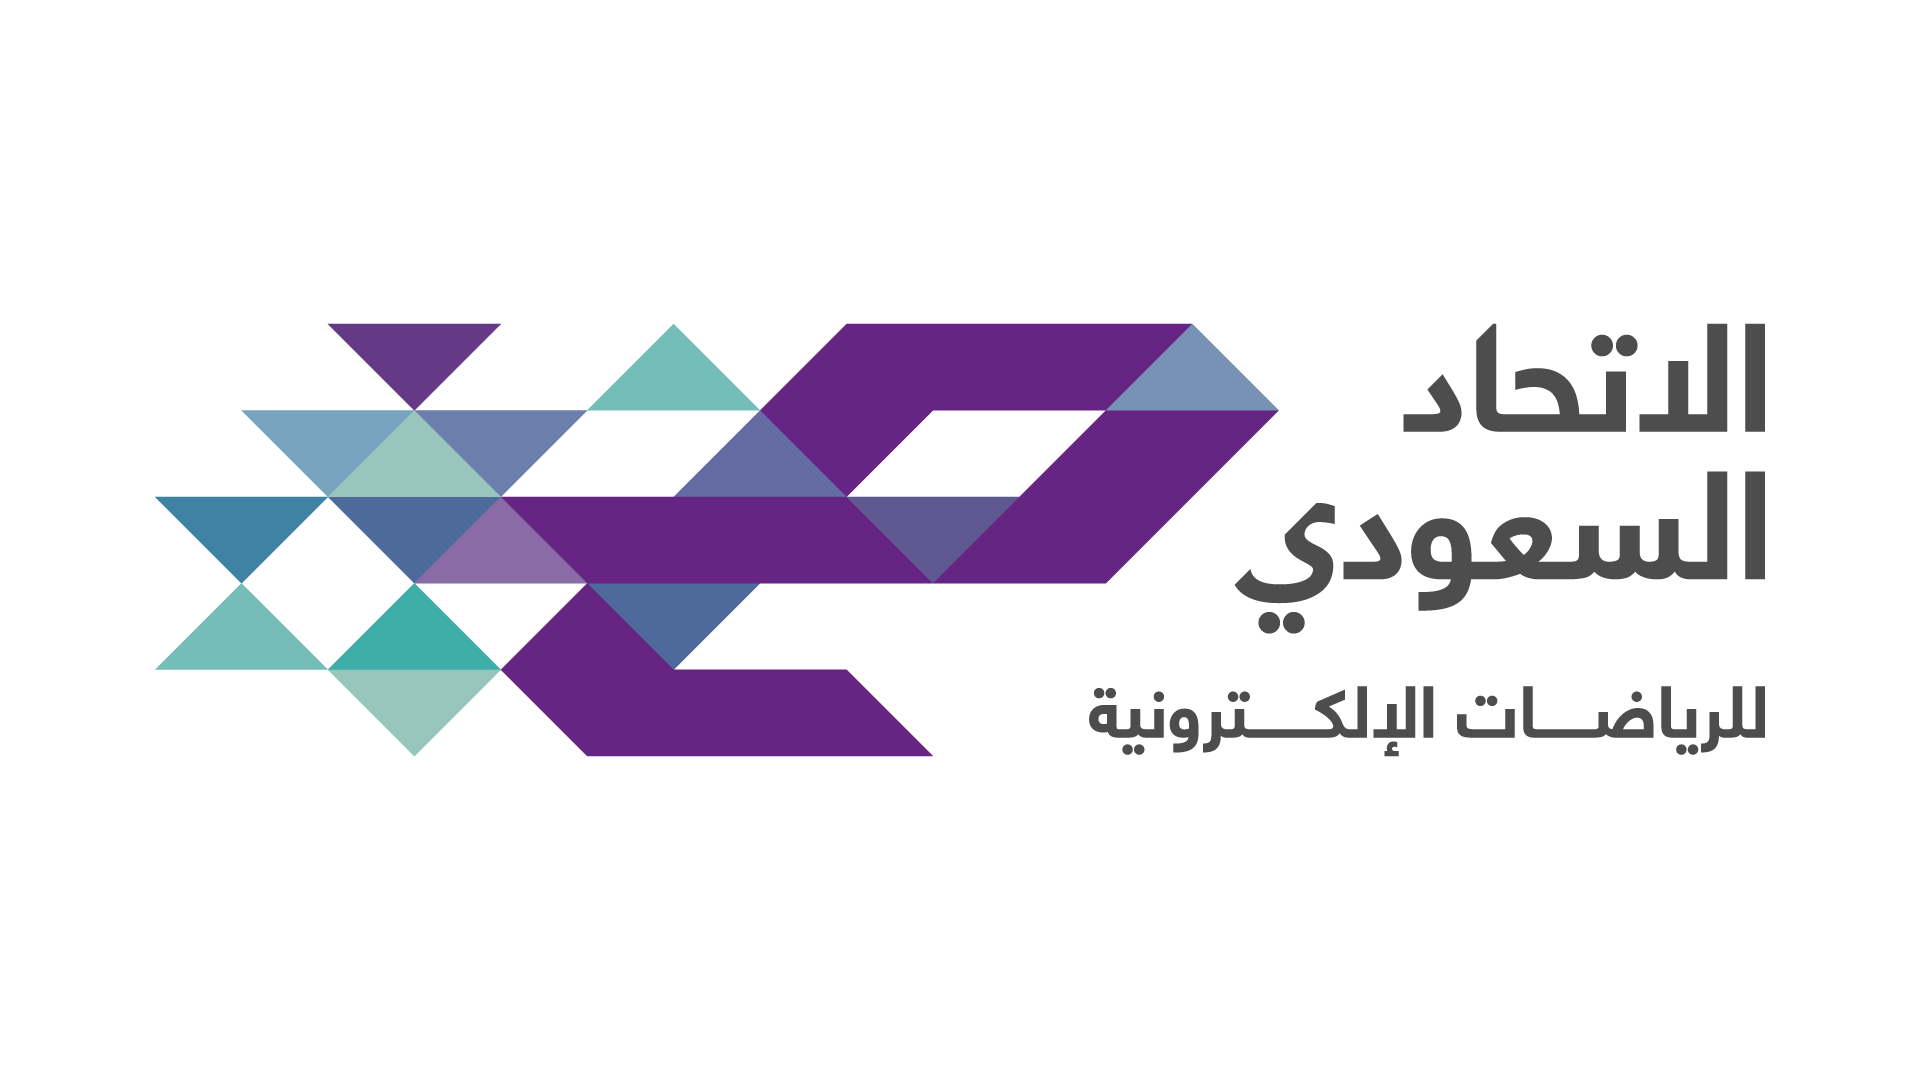 The Saudi Arabian Federation for Electronic Sports